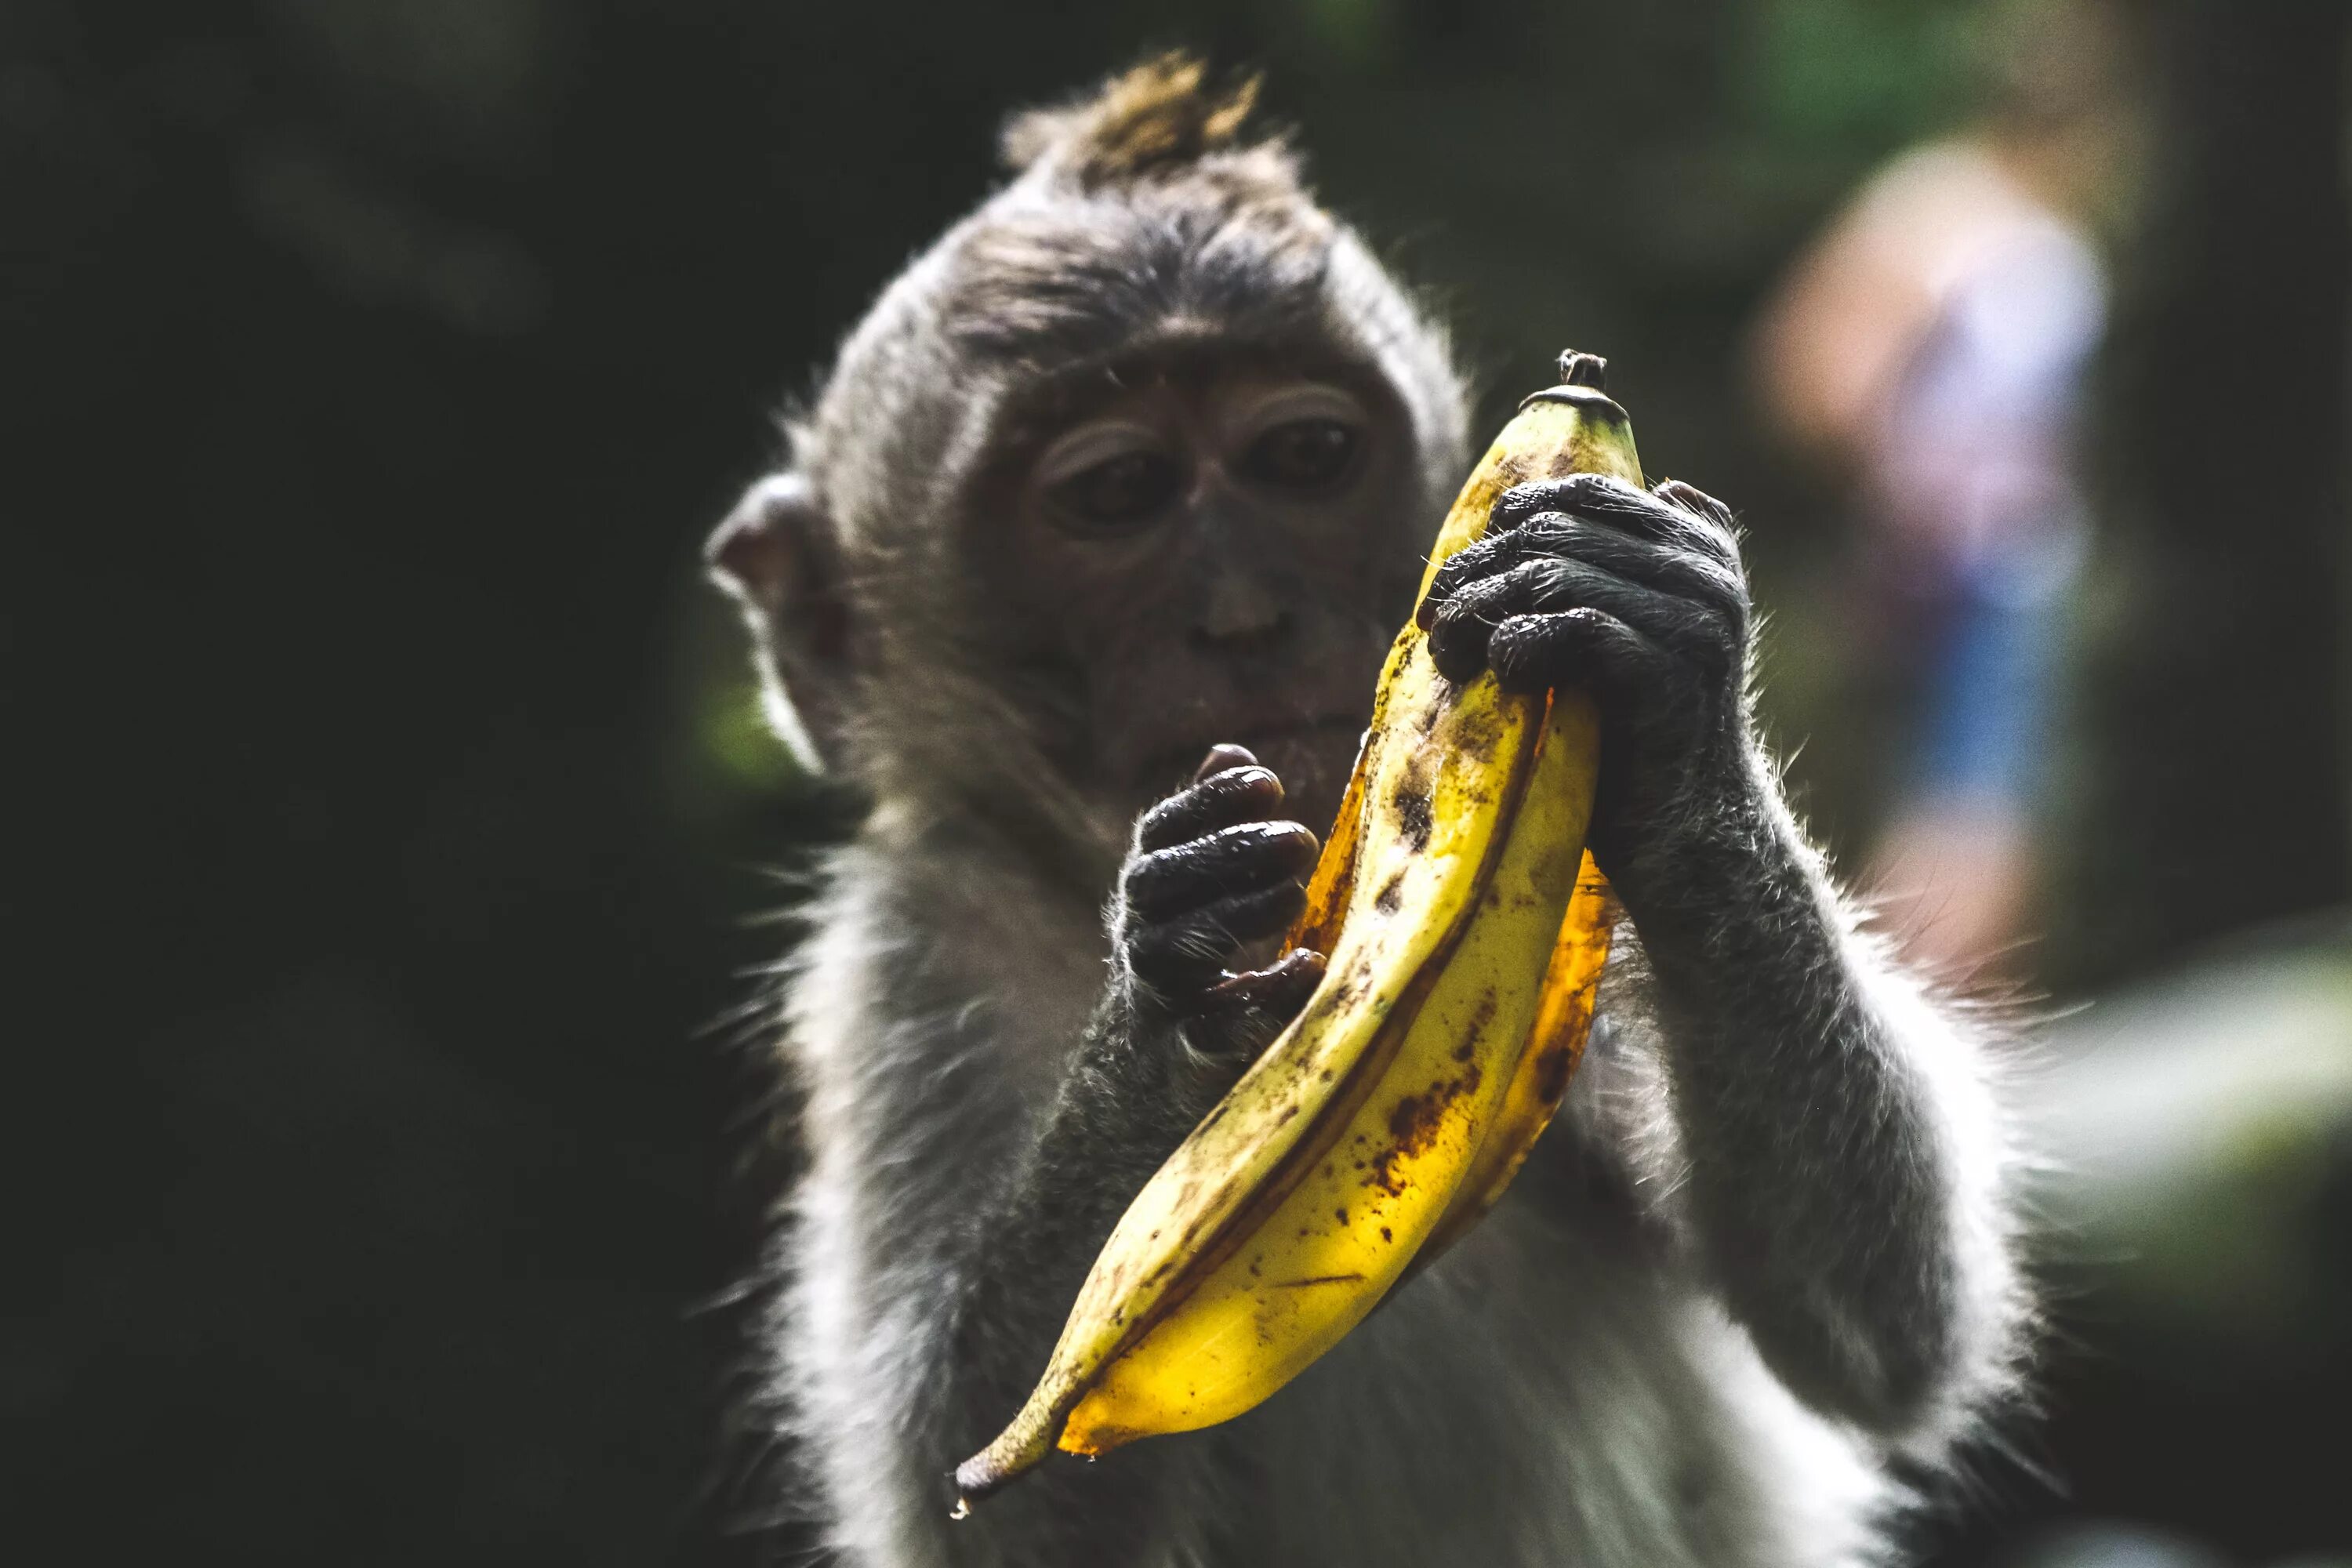 Обезьяна с бананом. Бибизьяна с бонаном. Obezyano s bansnom. Шимпанзе с бананом. They like bananas